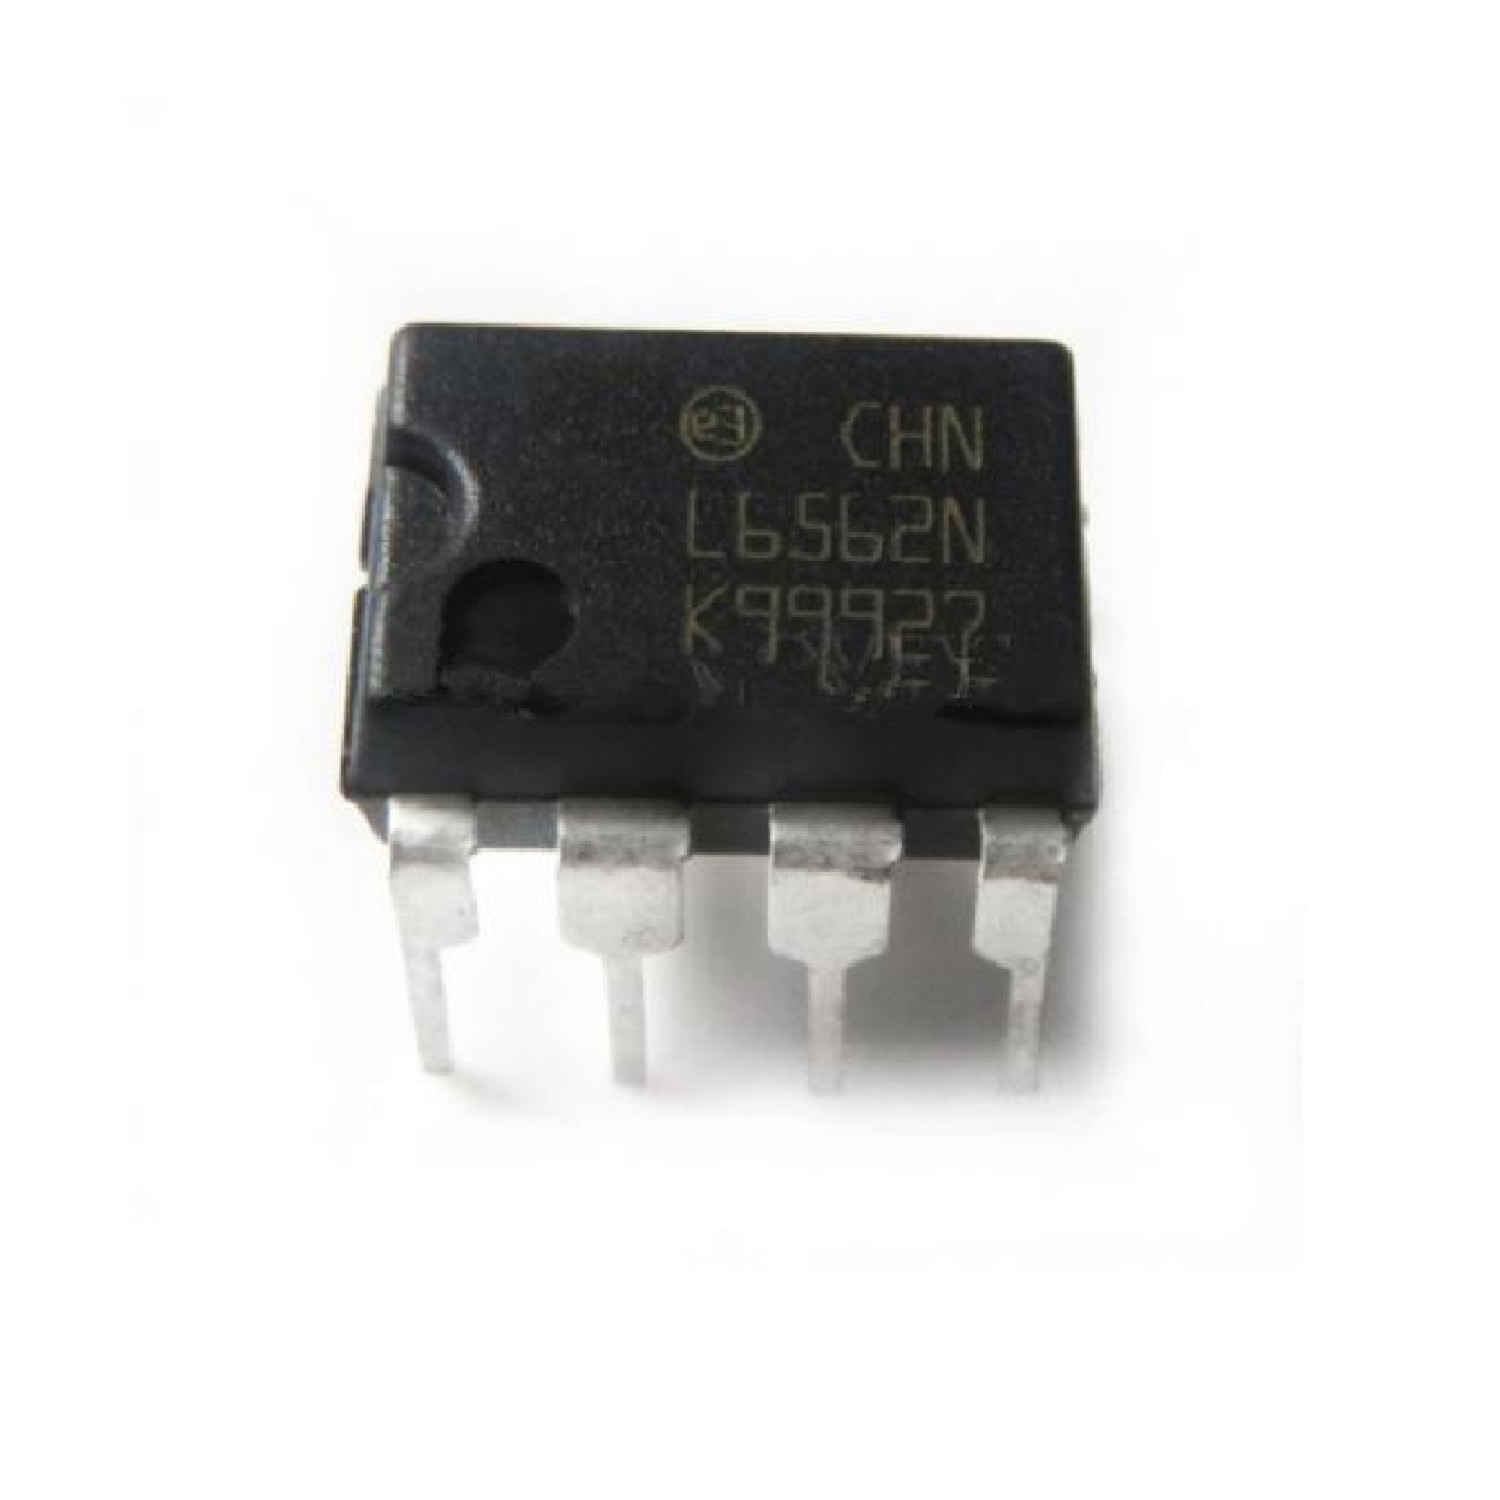 L6562N C.INTEGRADO LCD